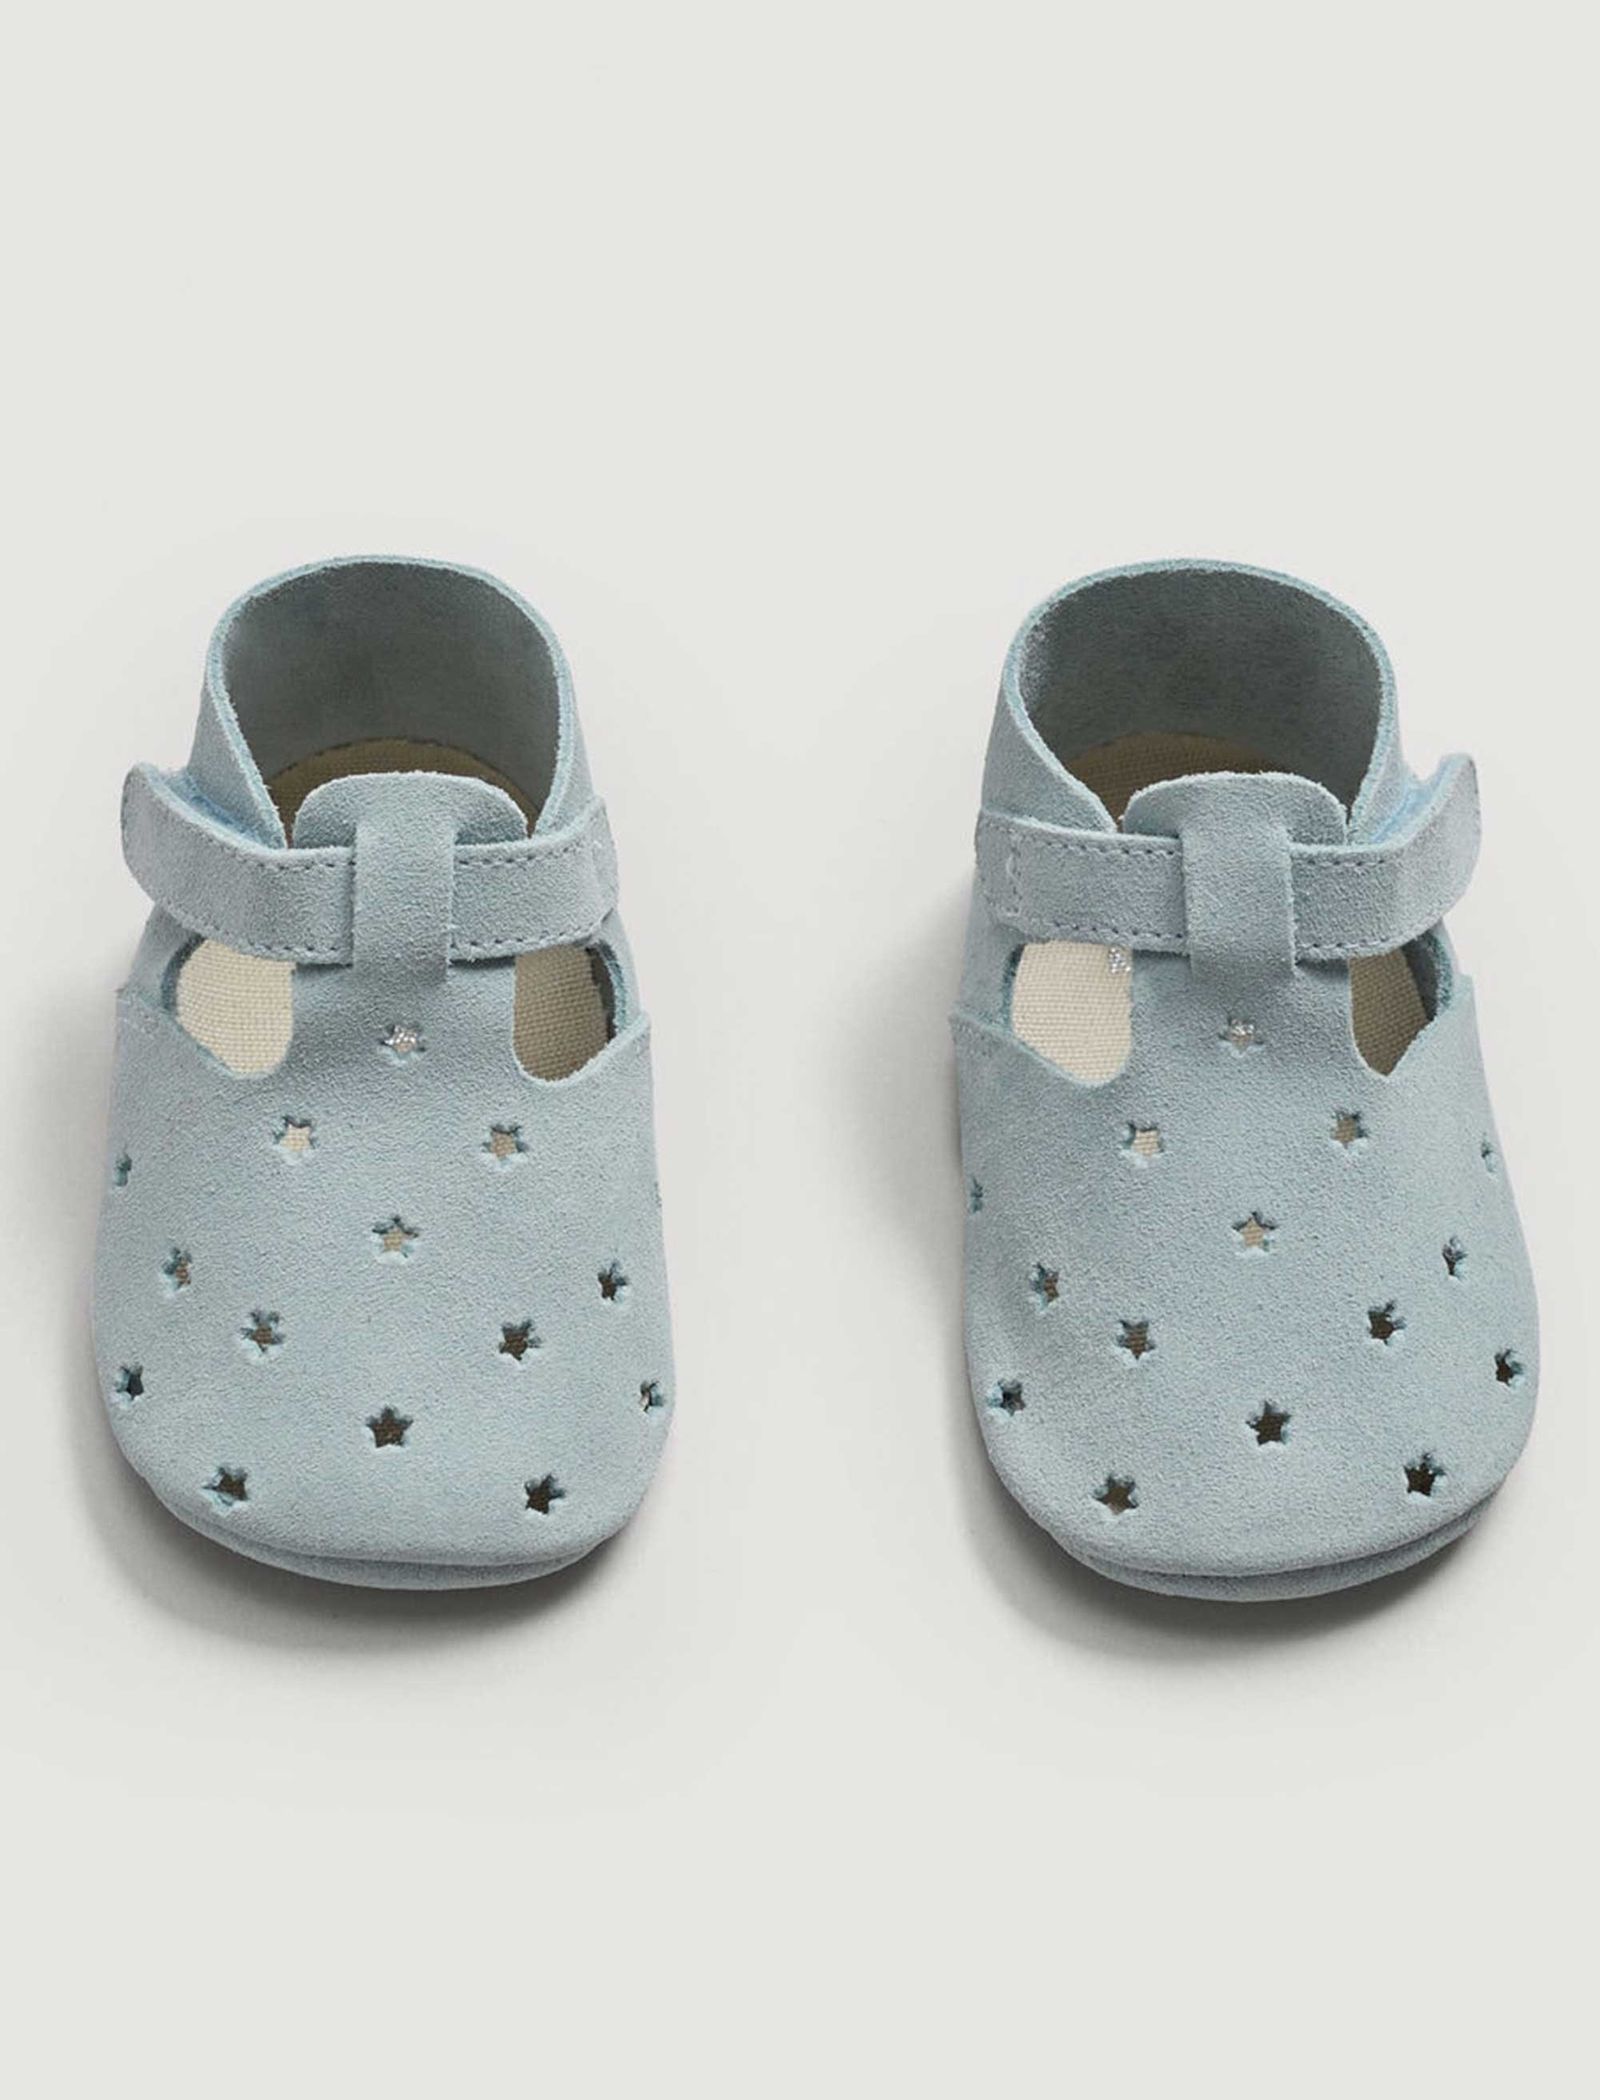 کفش نوزادی دخترانه - مانگو - آبی روشن - 5